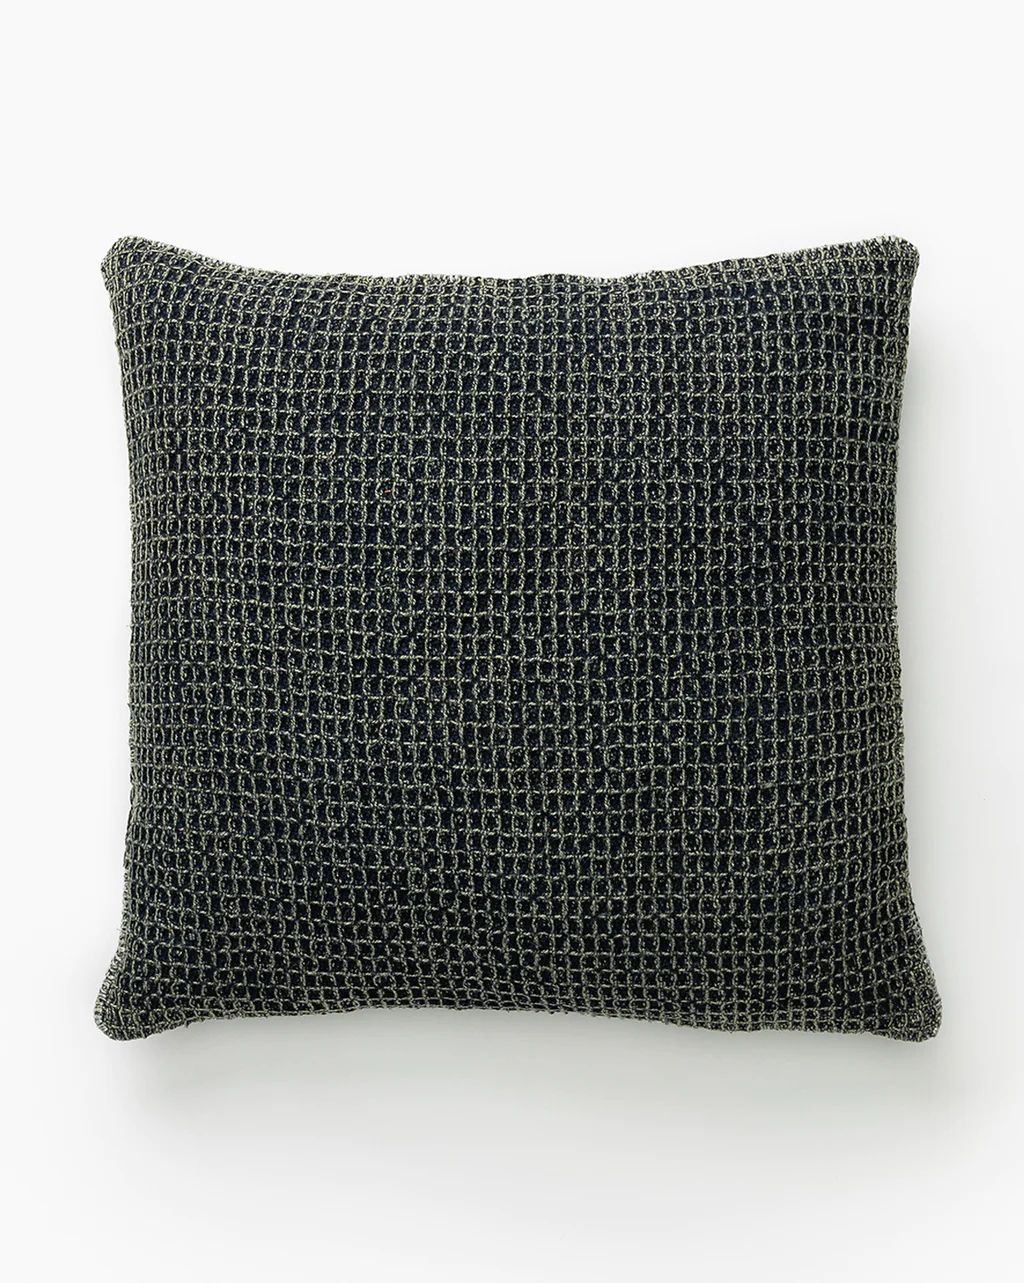 Danbury Pillow Cover | McGee & Co.